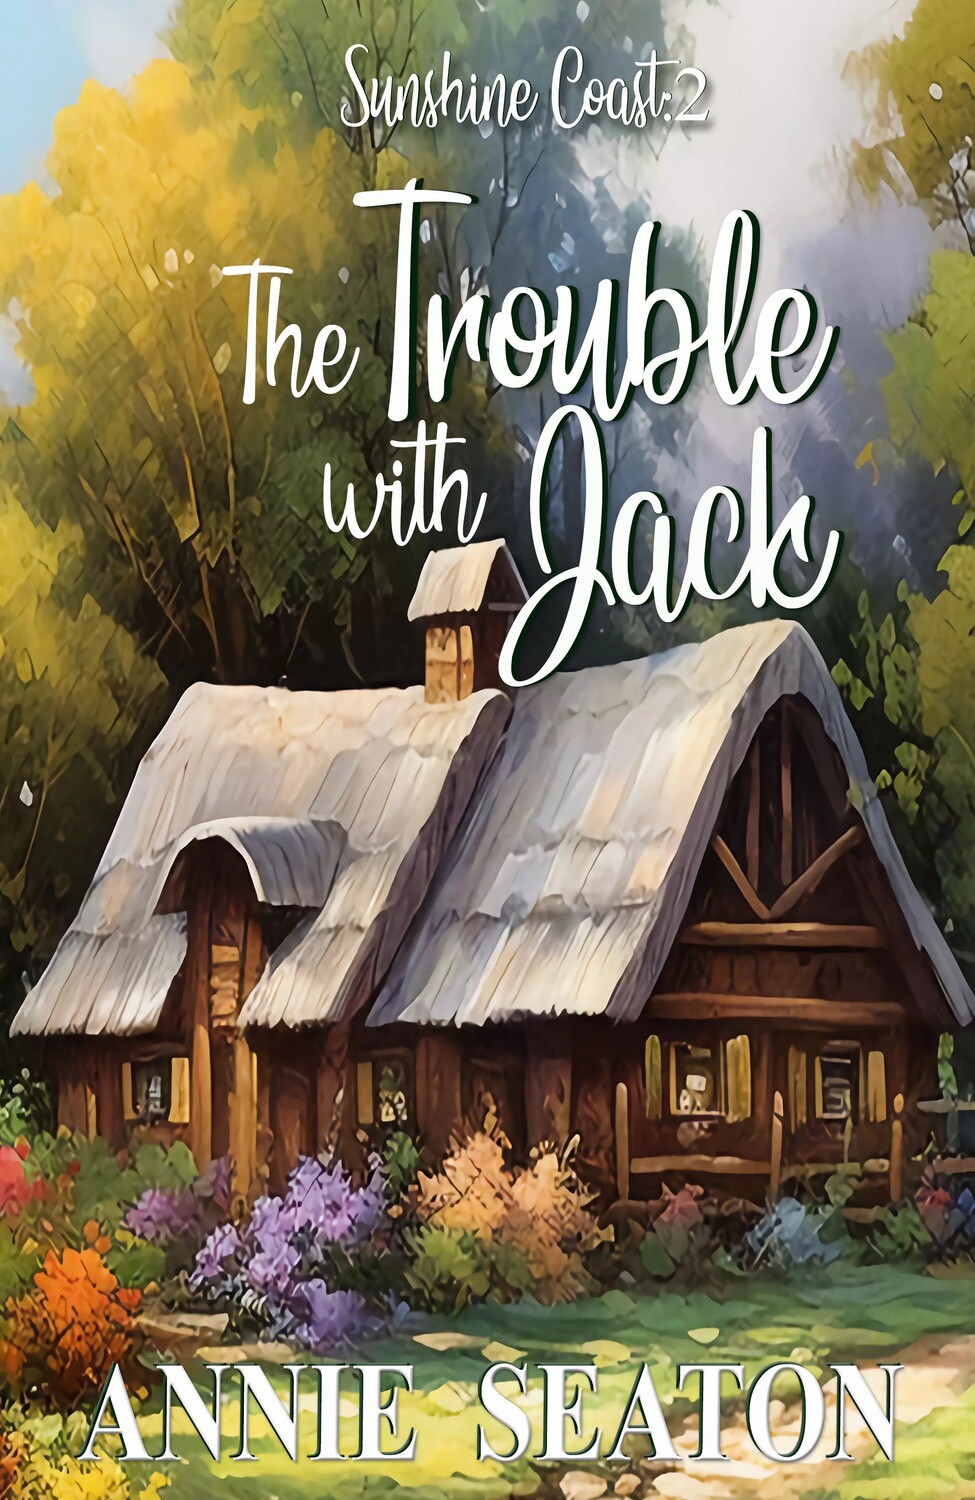 Sunshine Coast Book 2 The Trouble with Jack